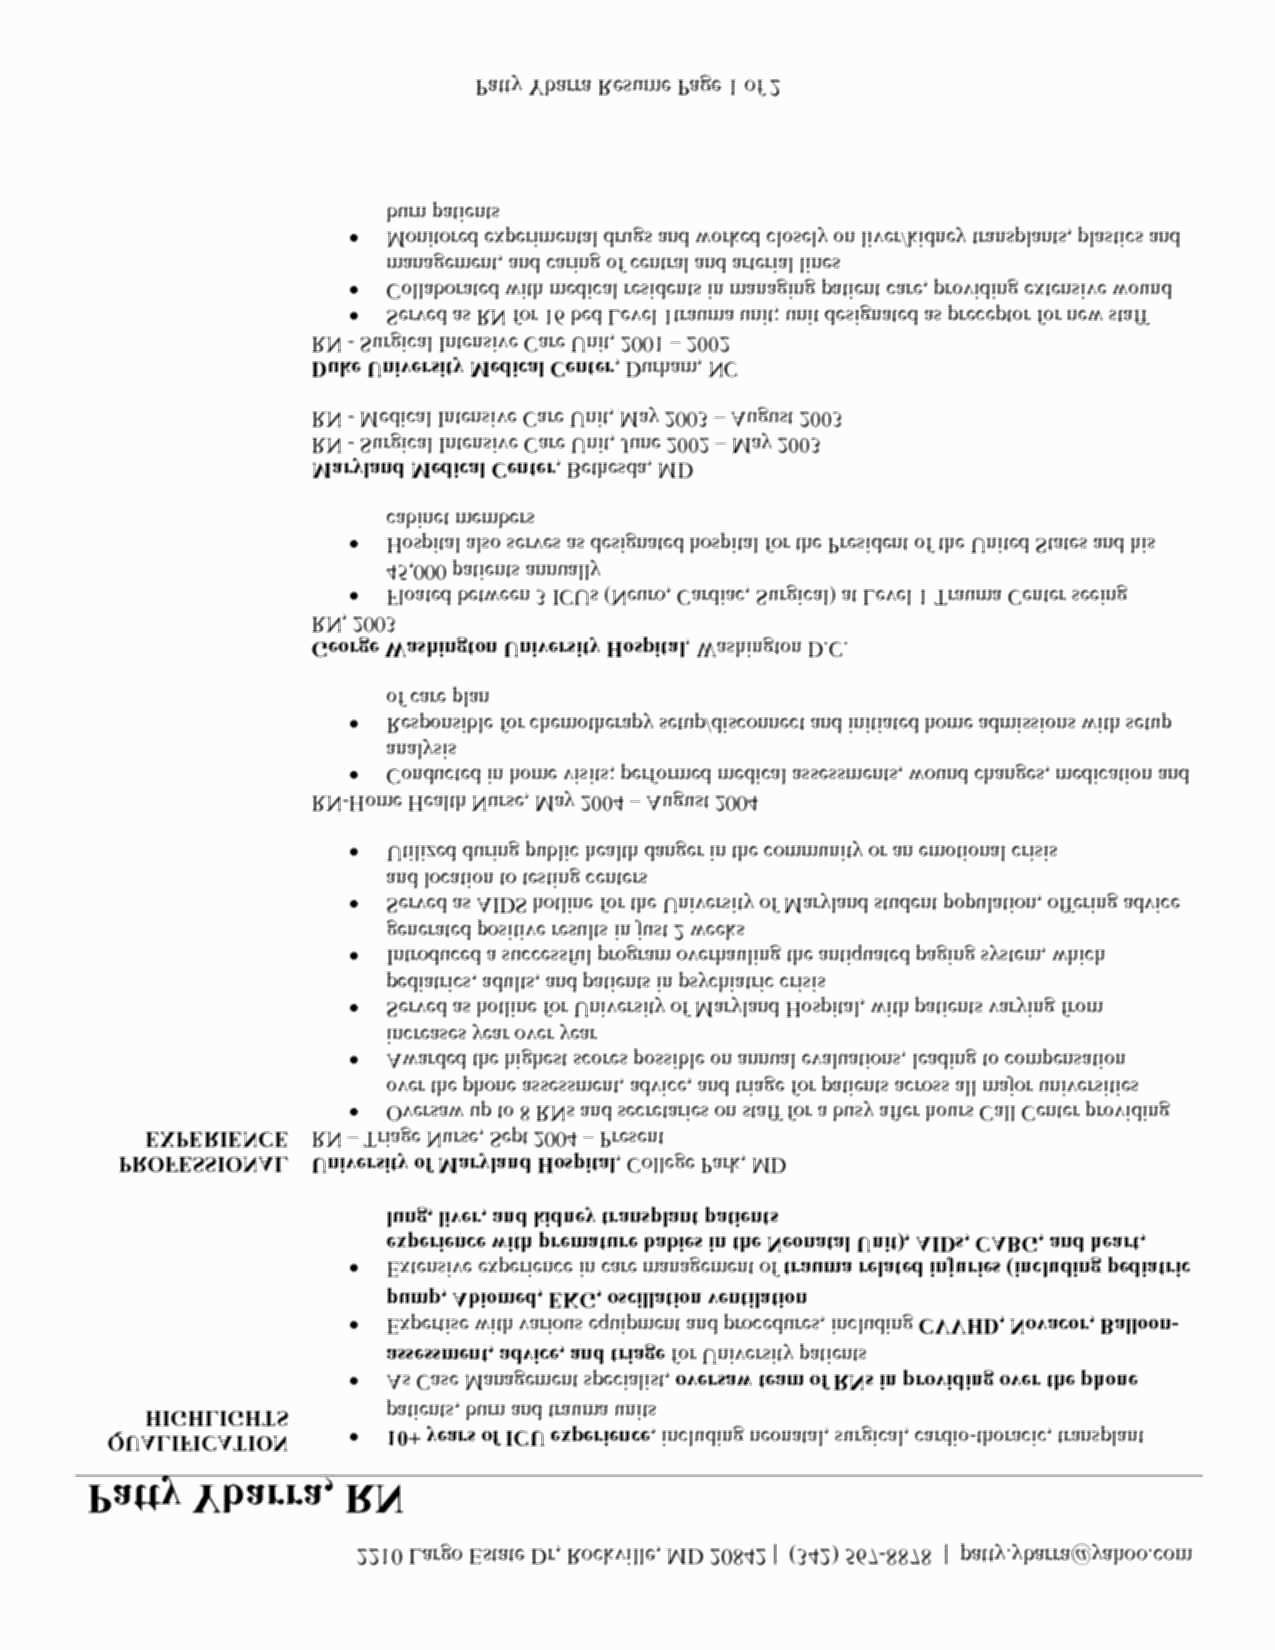 Functional Resume Template Free Functional Resume Template For Waitress 12 To Print Of functional resume template|wikiresume.com